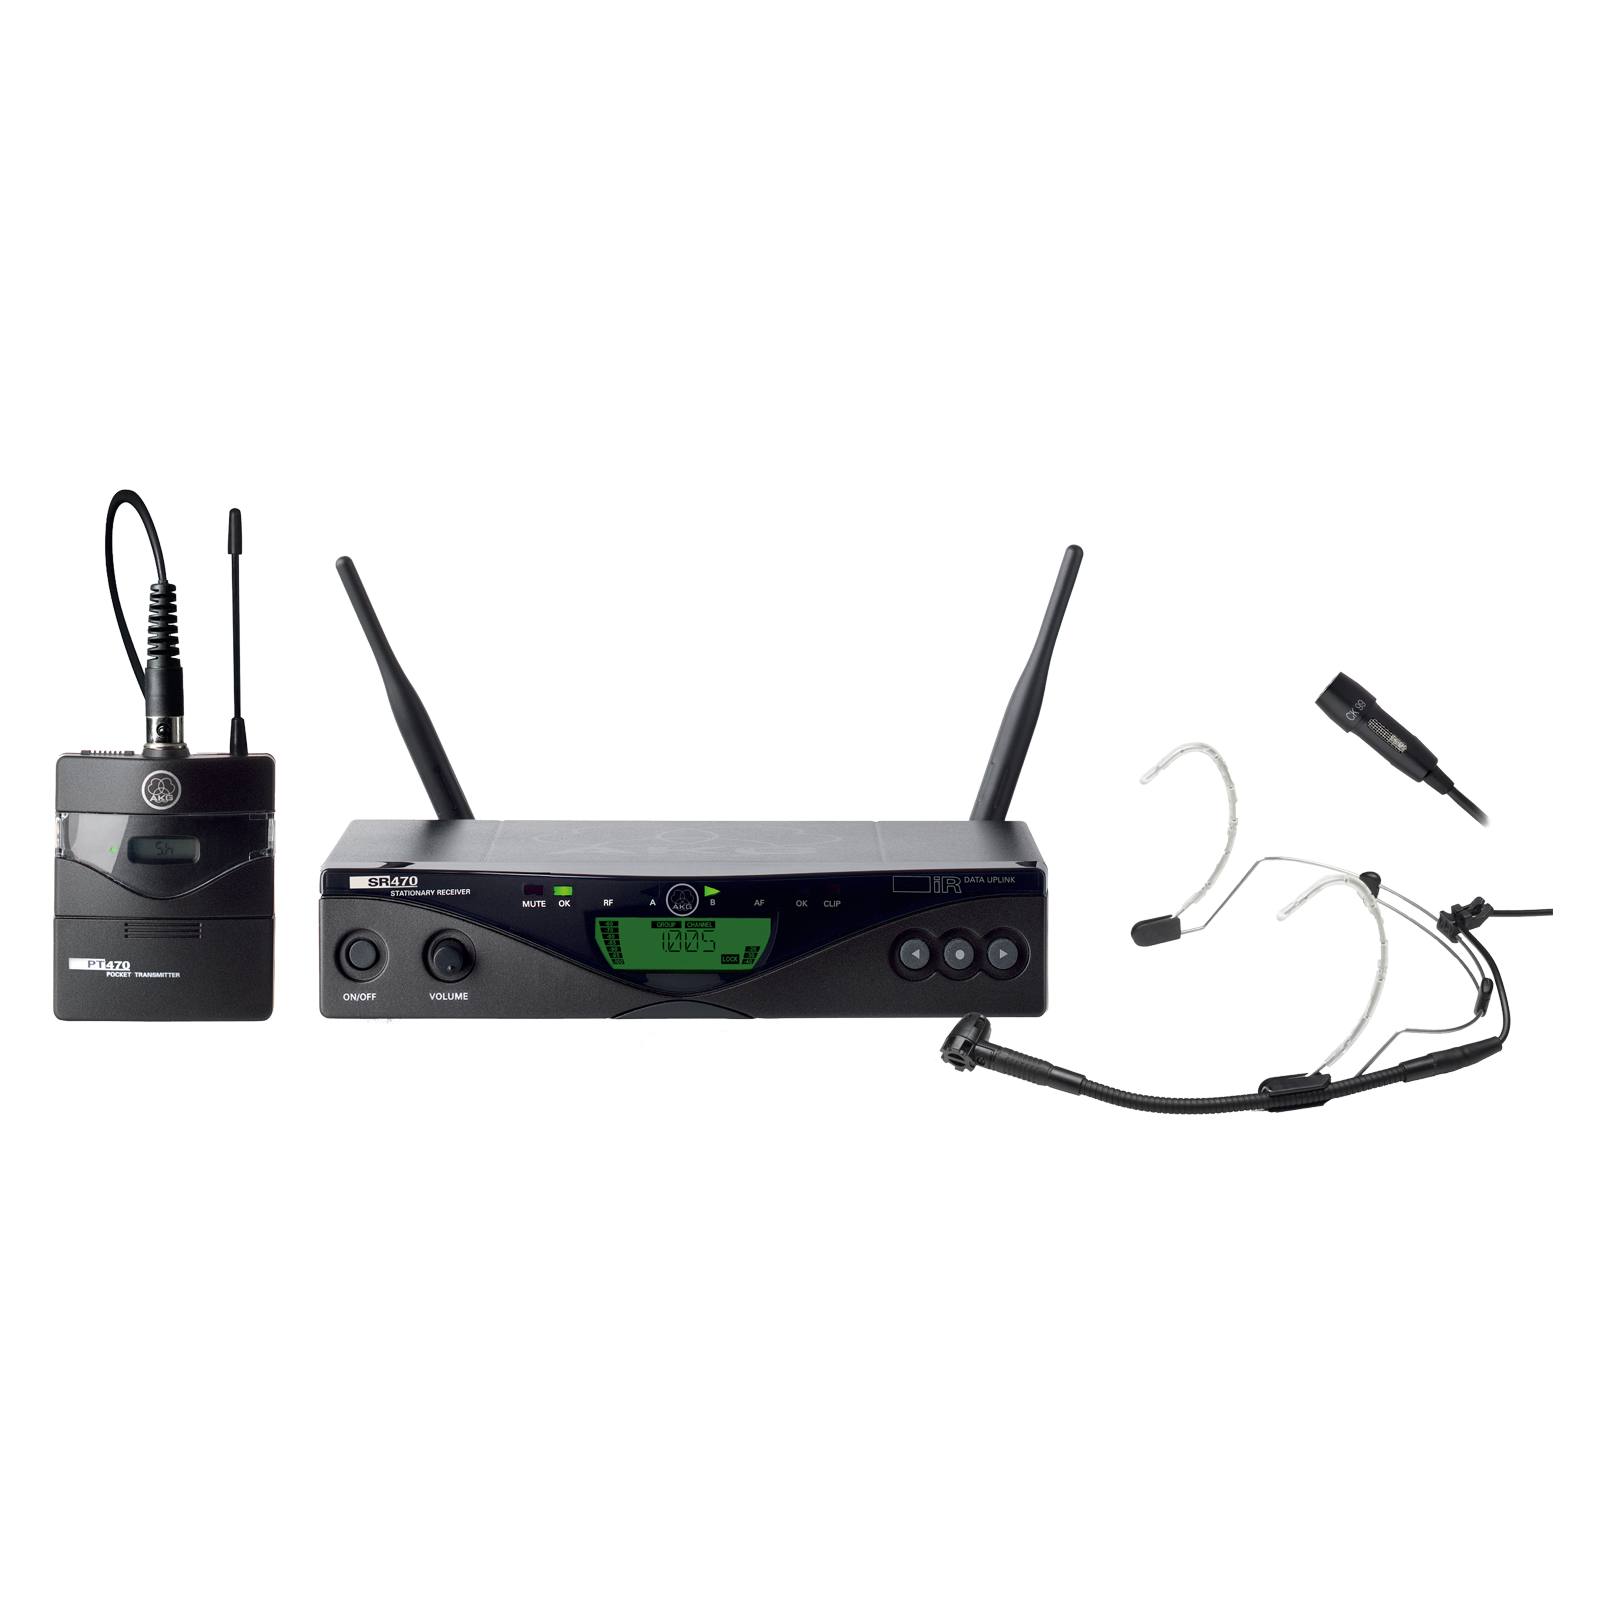 WMS470 Presenter Set Band-7 50mW EU/US/UK (B-Stock) - Black - Professional wireless microphone system - Hero